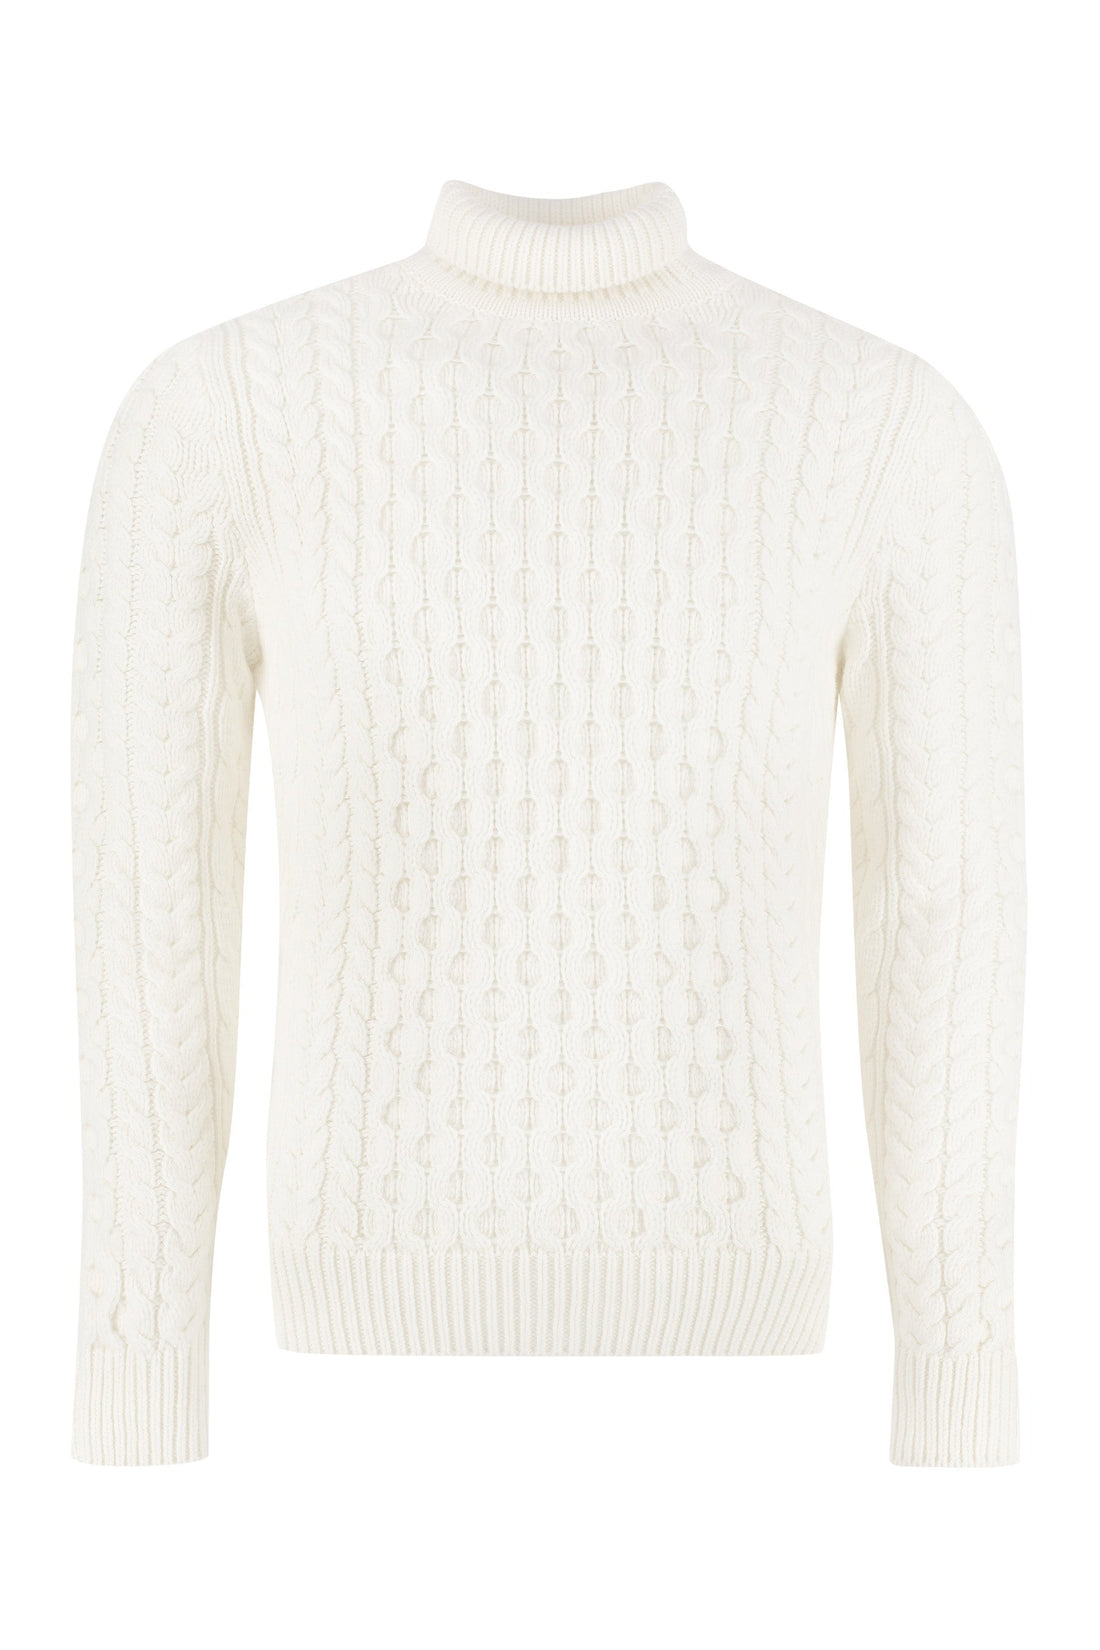 Alexander McQueen-OUTLET-SALE-Wool turtleneck sweater-ARCHIVIST